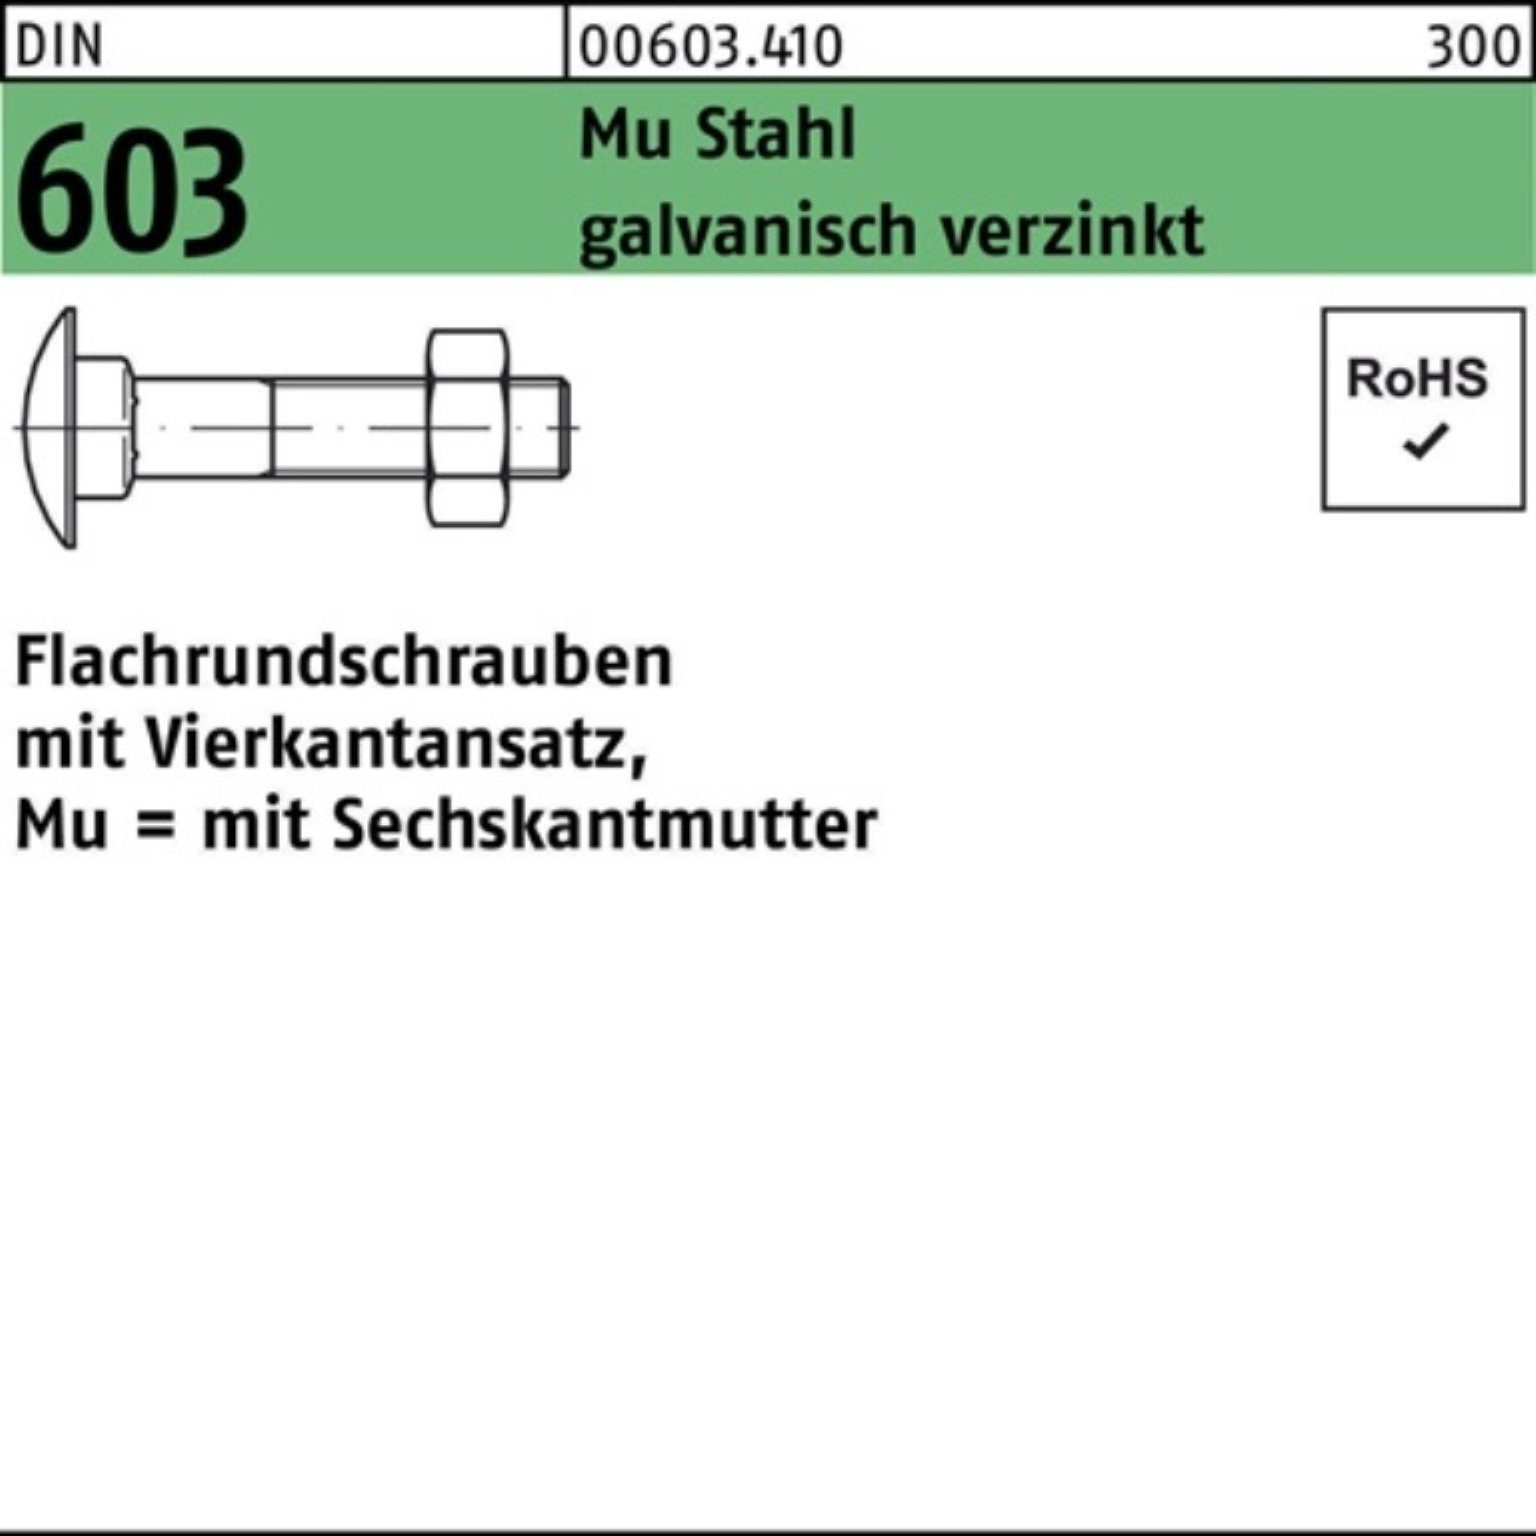 Pack Reyher DIN Flachrundschraube Schraube Vierkantansatz/6-ktmutter M12x100 603 100er